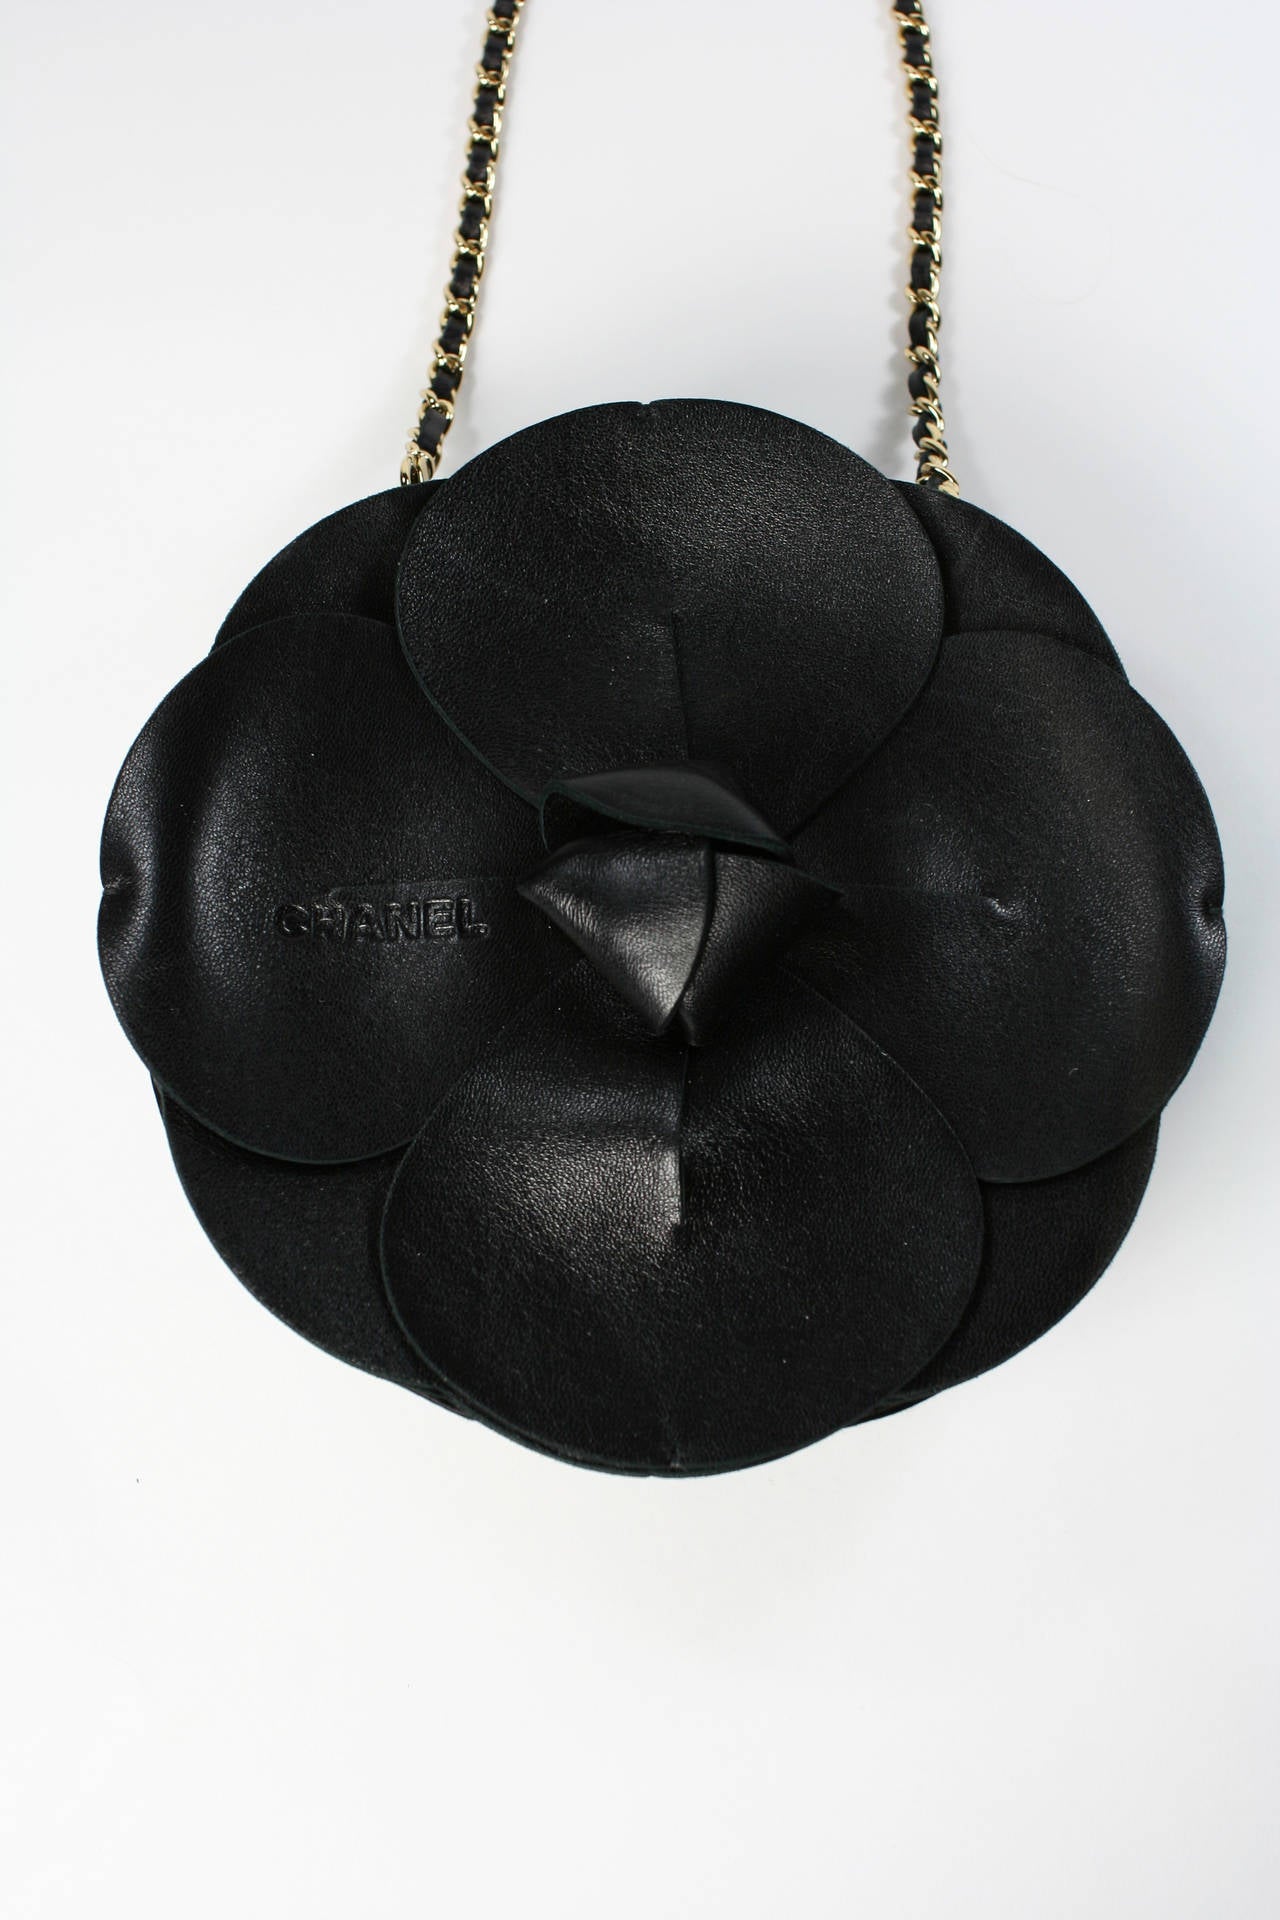 Chanel Black Camelia Handbag Mint 1